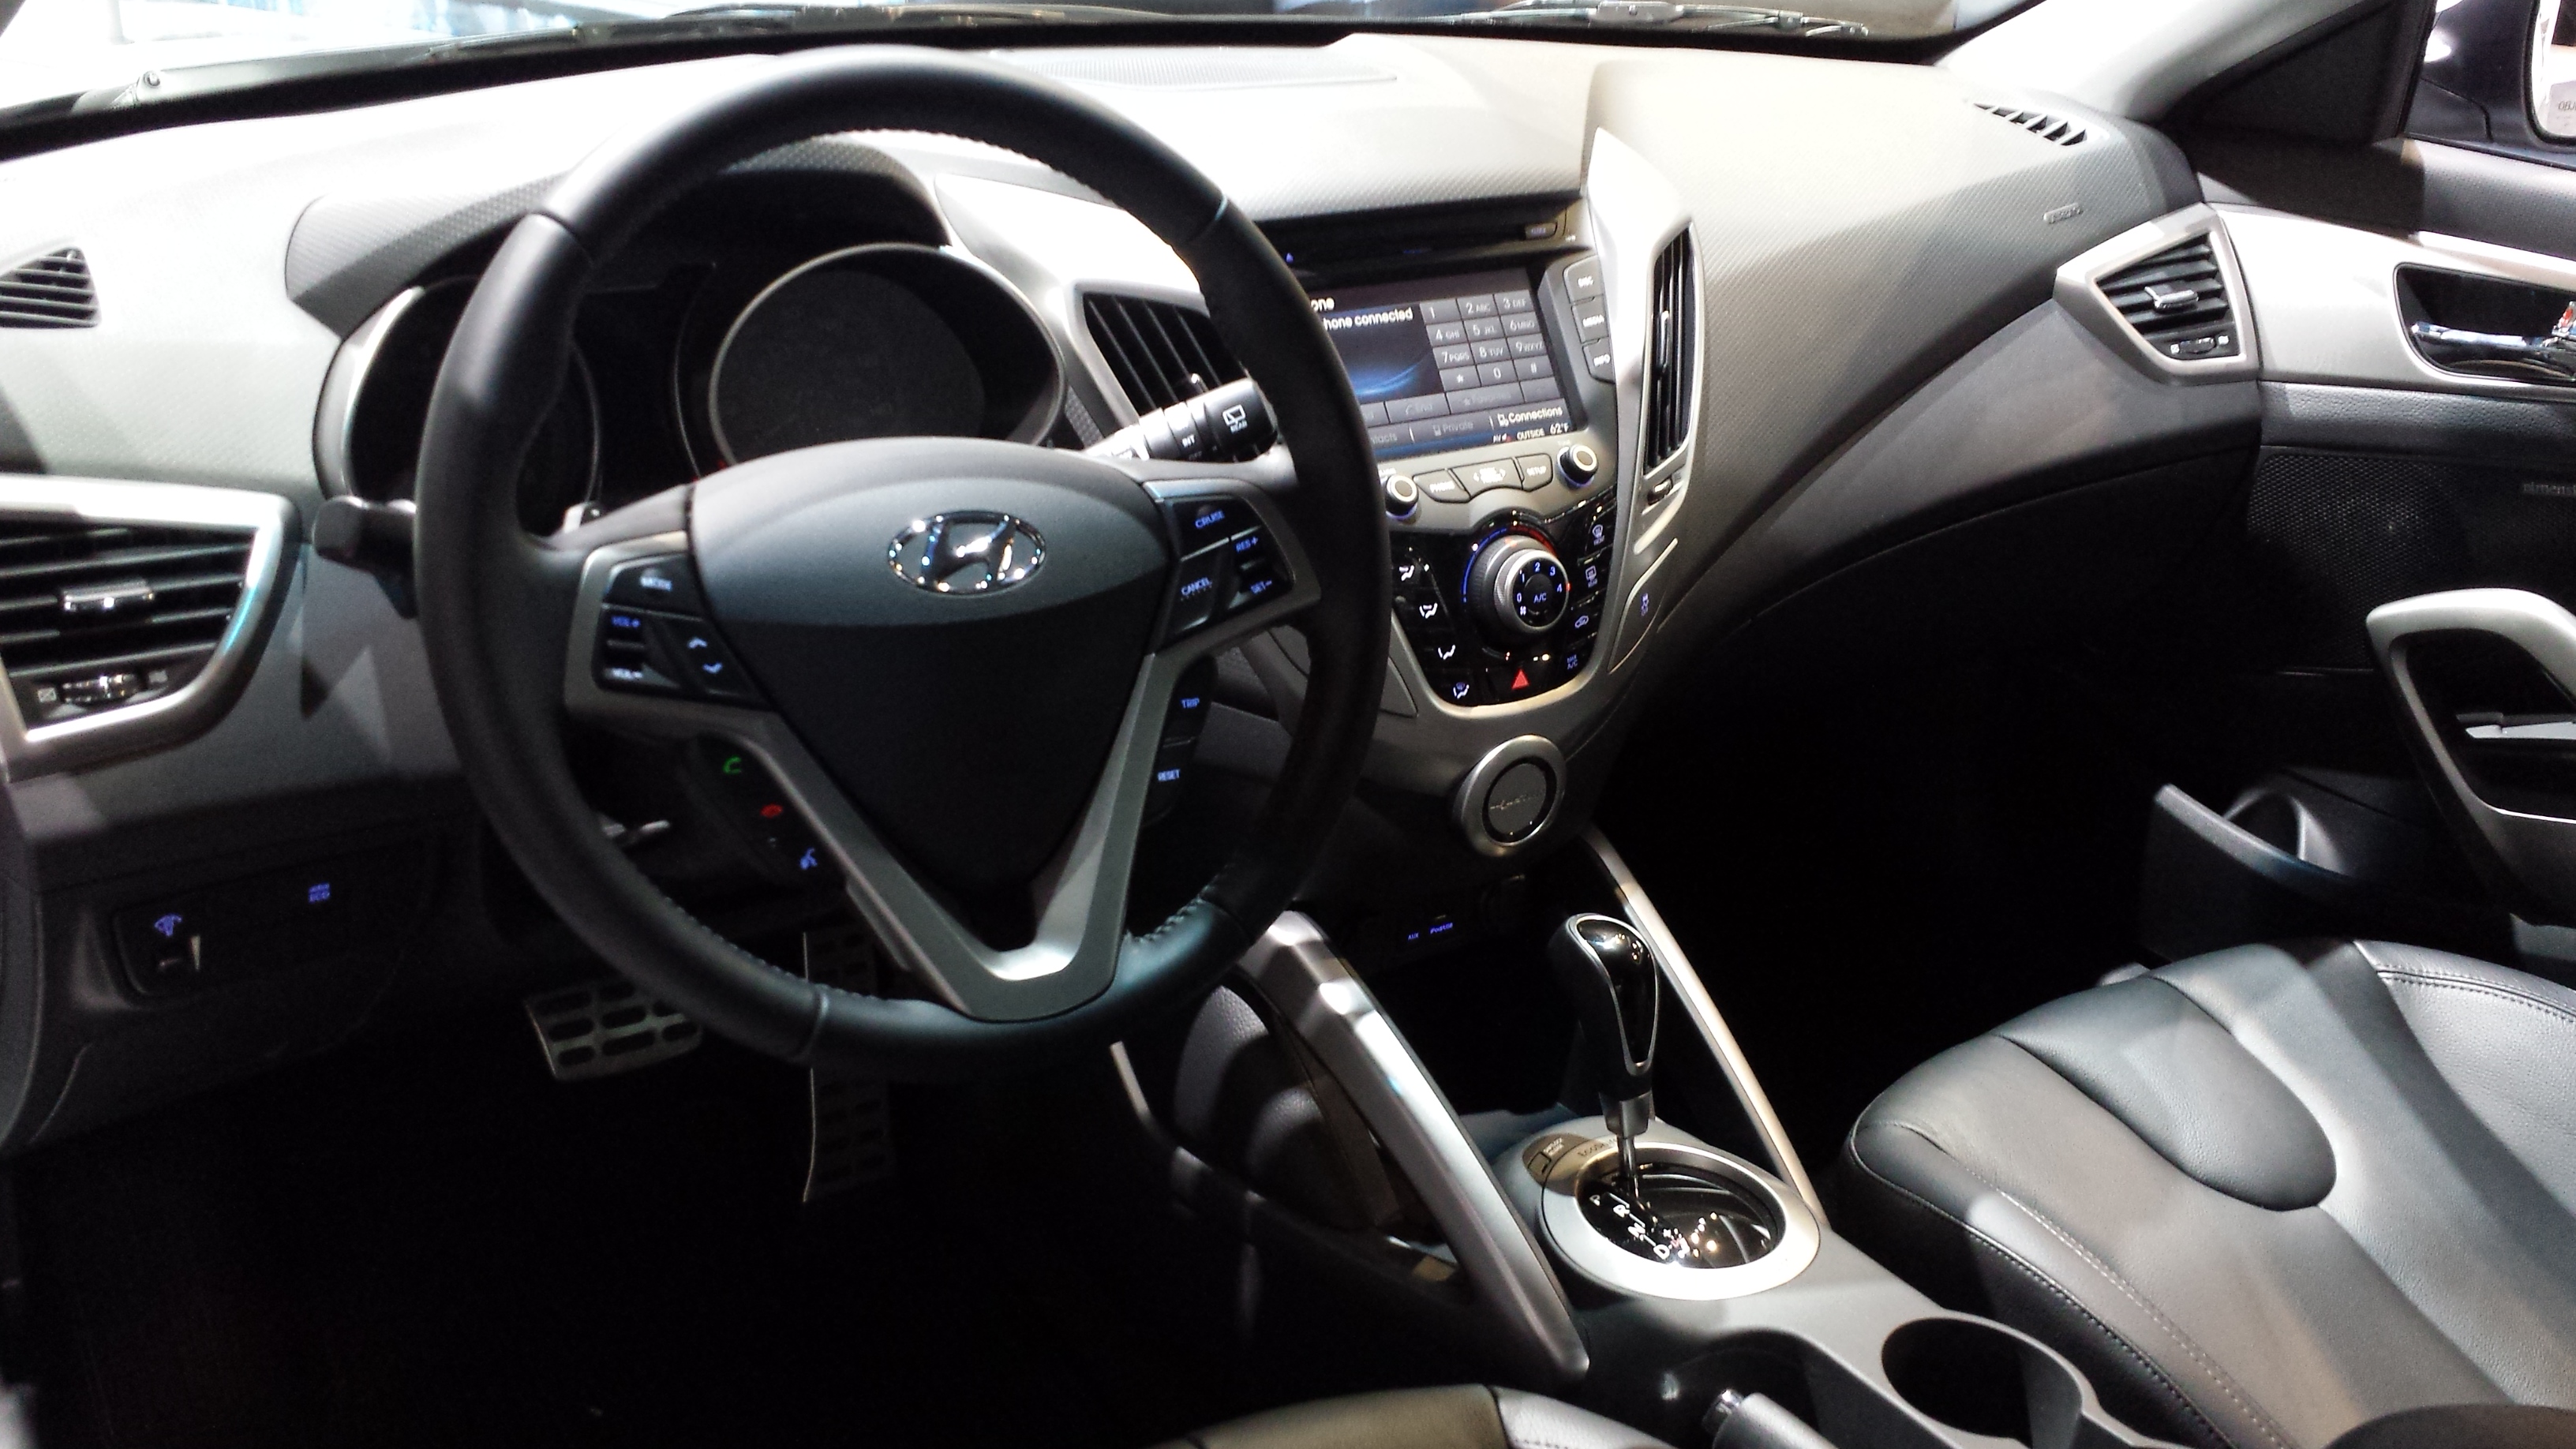 Hyundai Veloster Reflex Backgrounds, Compatible - PC, Mobile, Gadgets| 3264x1836 px